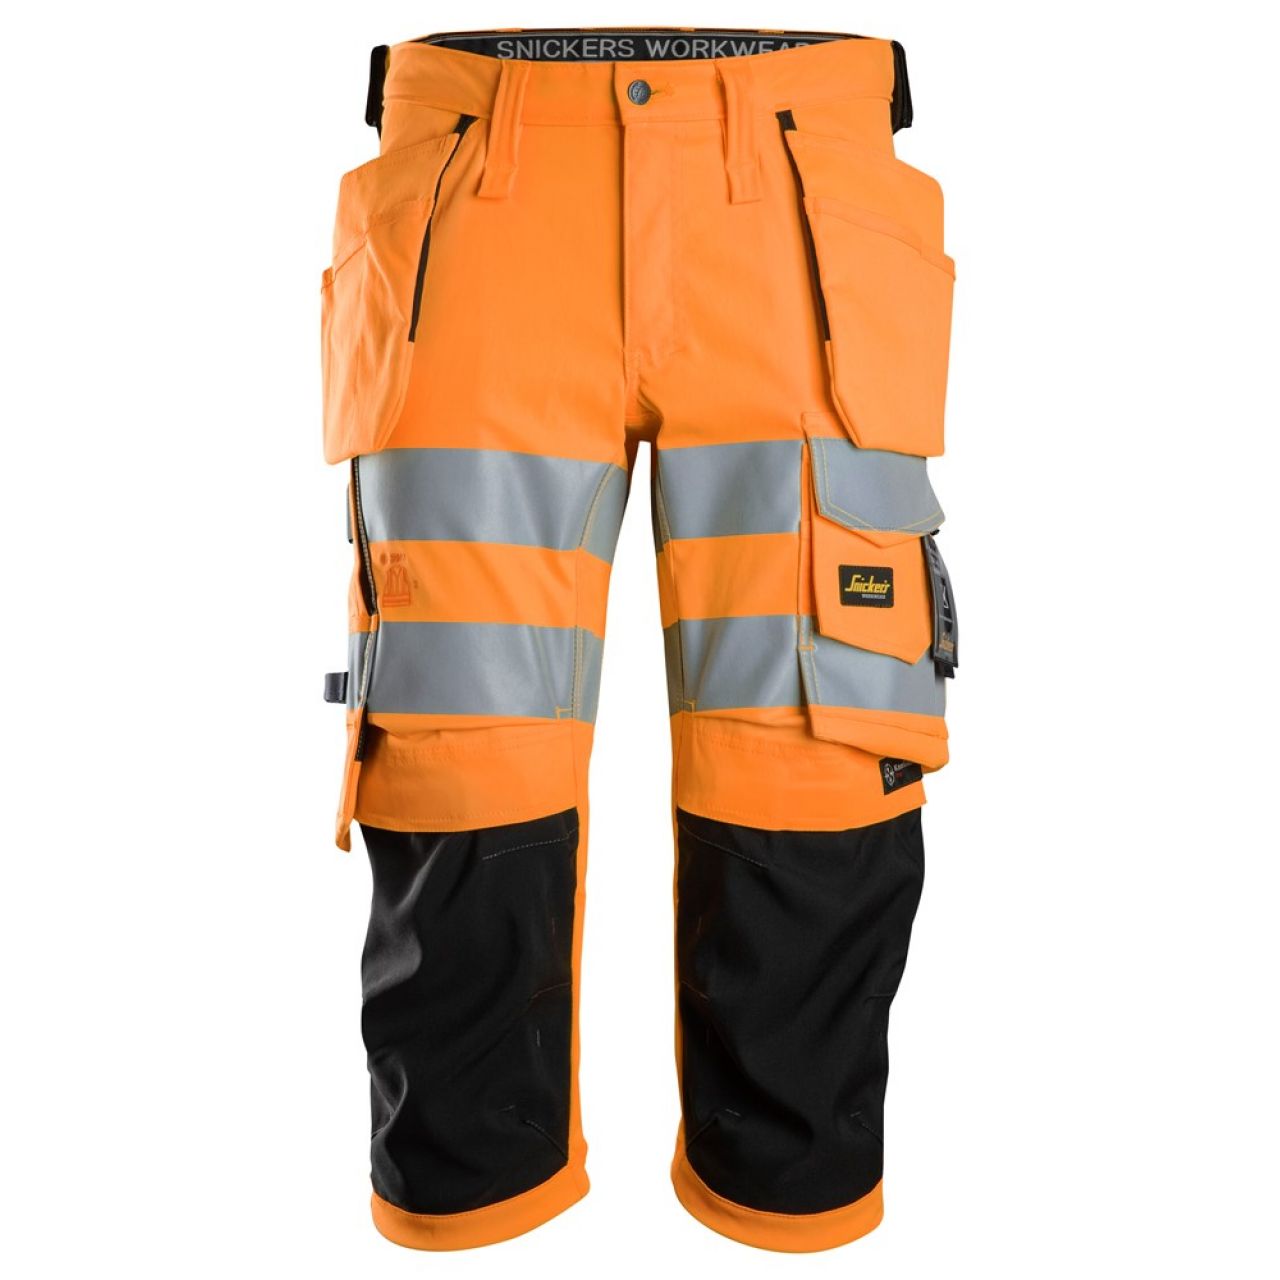 6138 Pantalones pirata de trabajo elásticos de alta visibilidad clase 1/2 con bolsillos flotantes naranja-negro talla 66